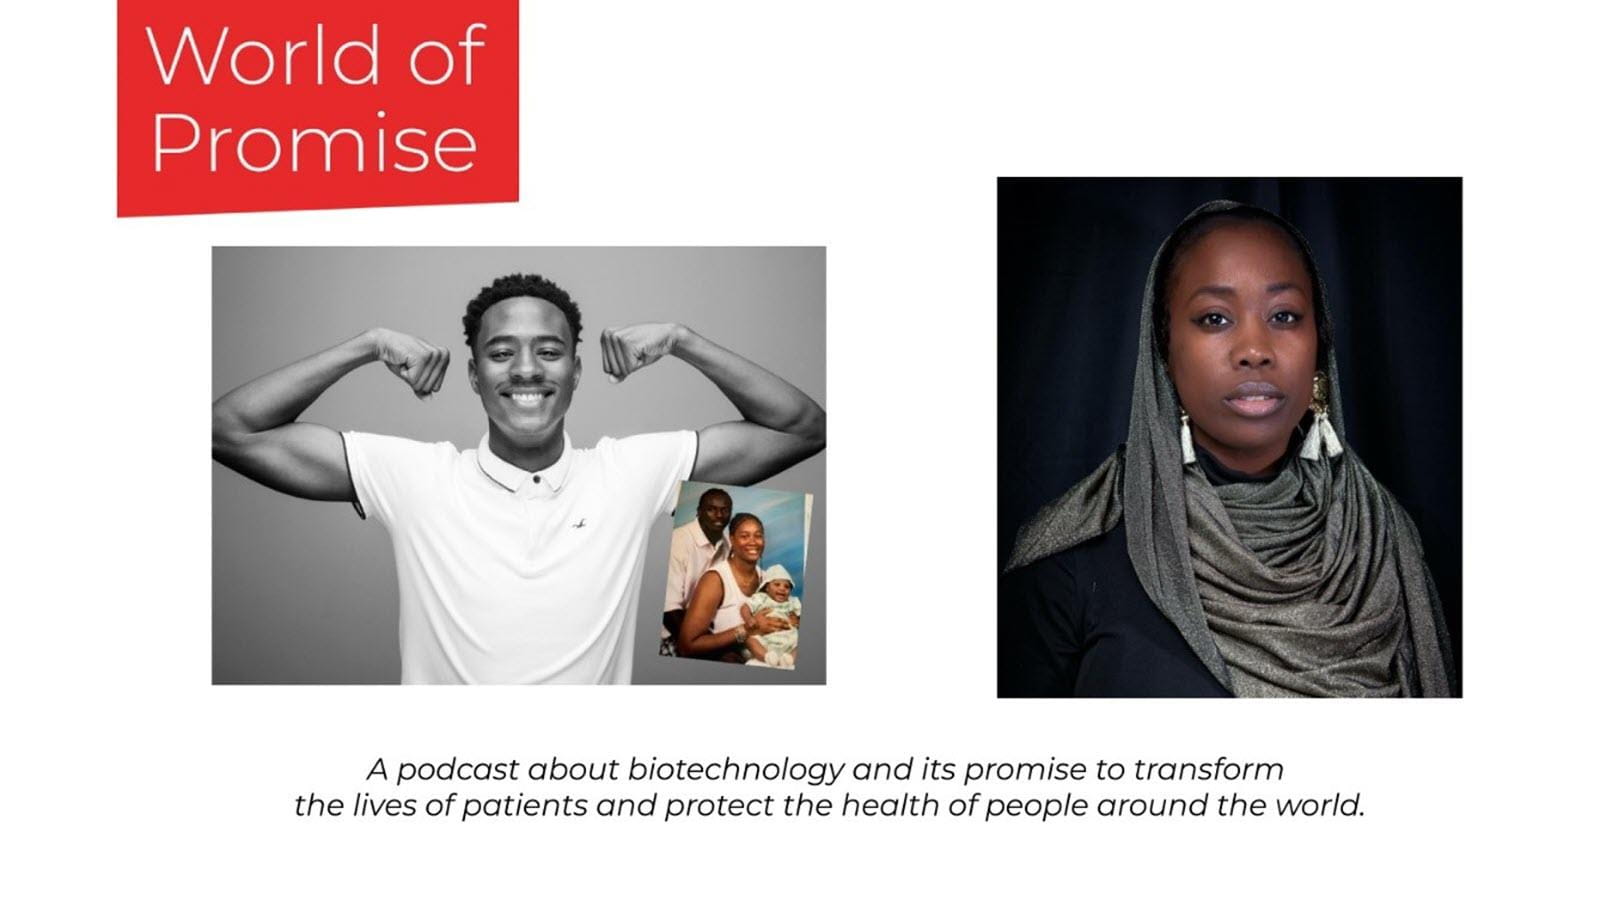 Portraits of Santonio Holmes III and Tahira Austin, two sickle cell disease advocates